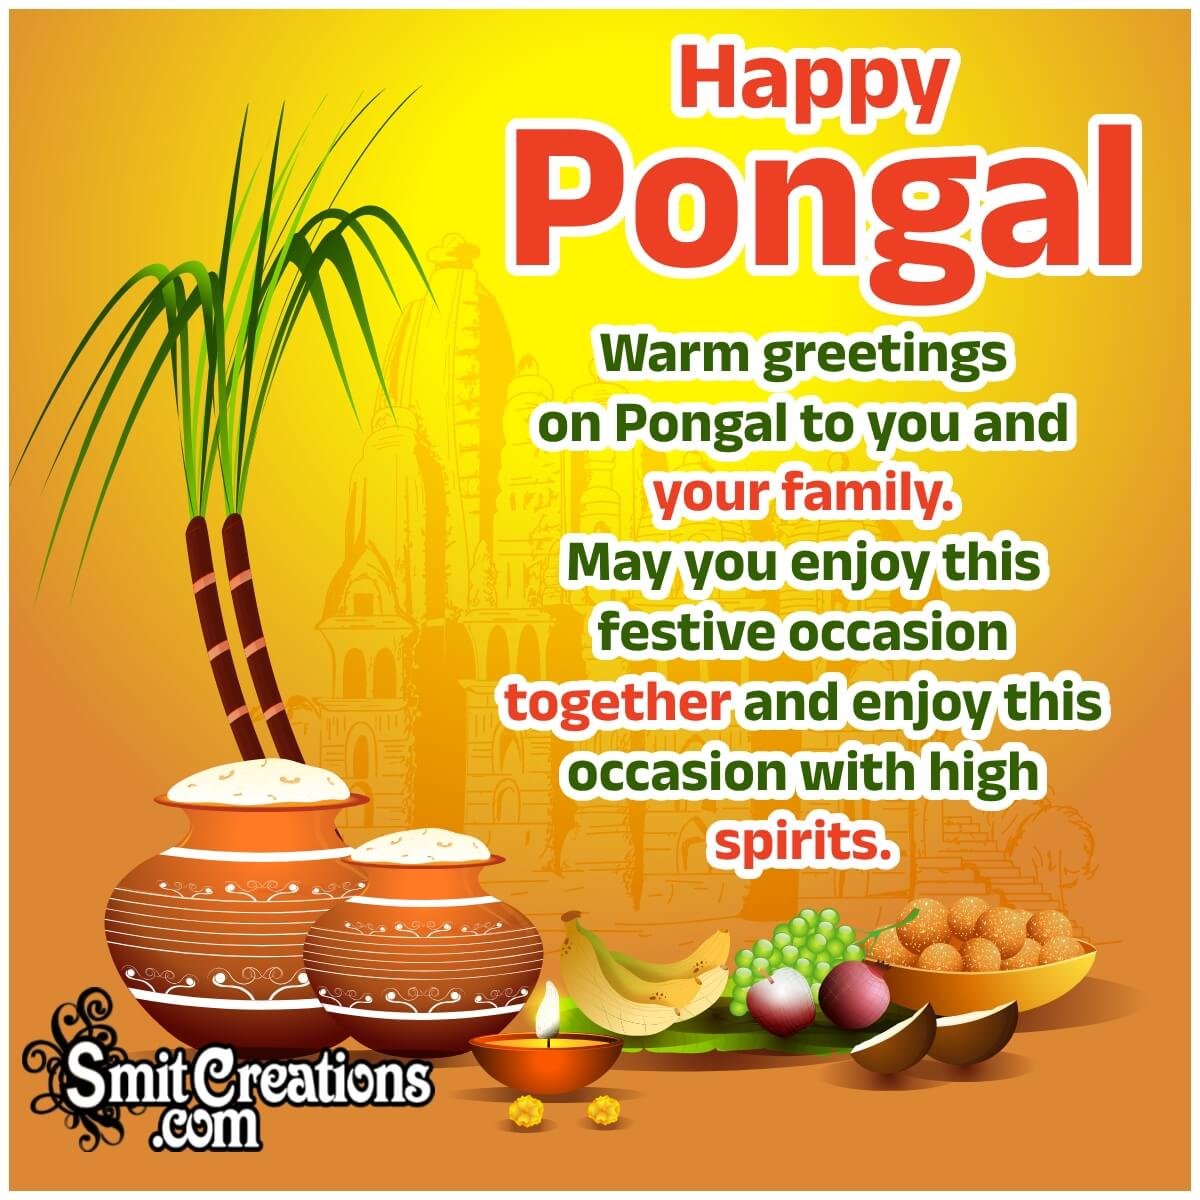 Happy Pongal Greetings Image